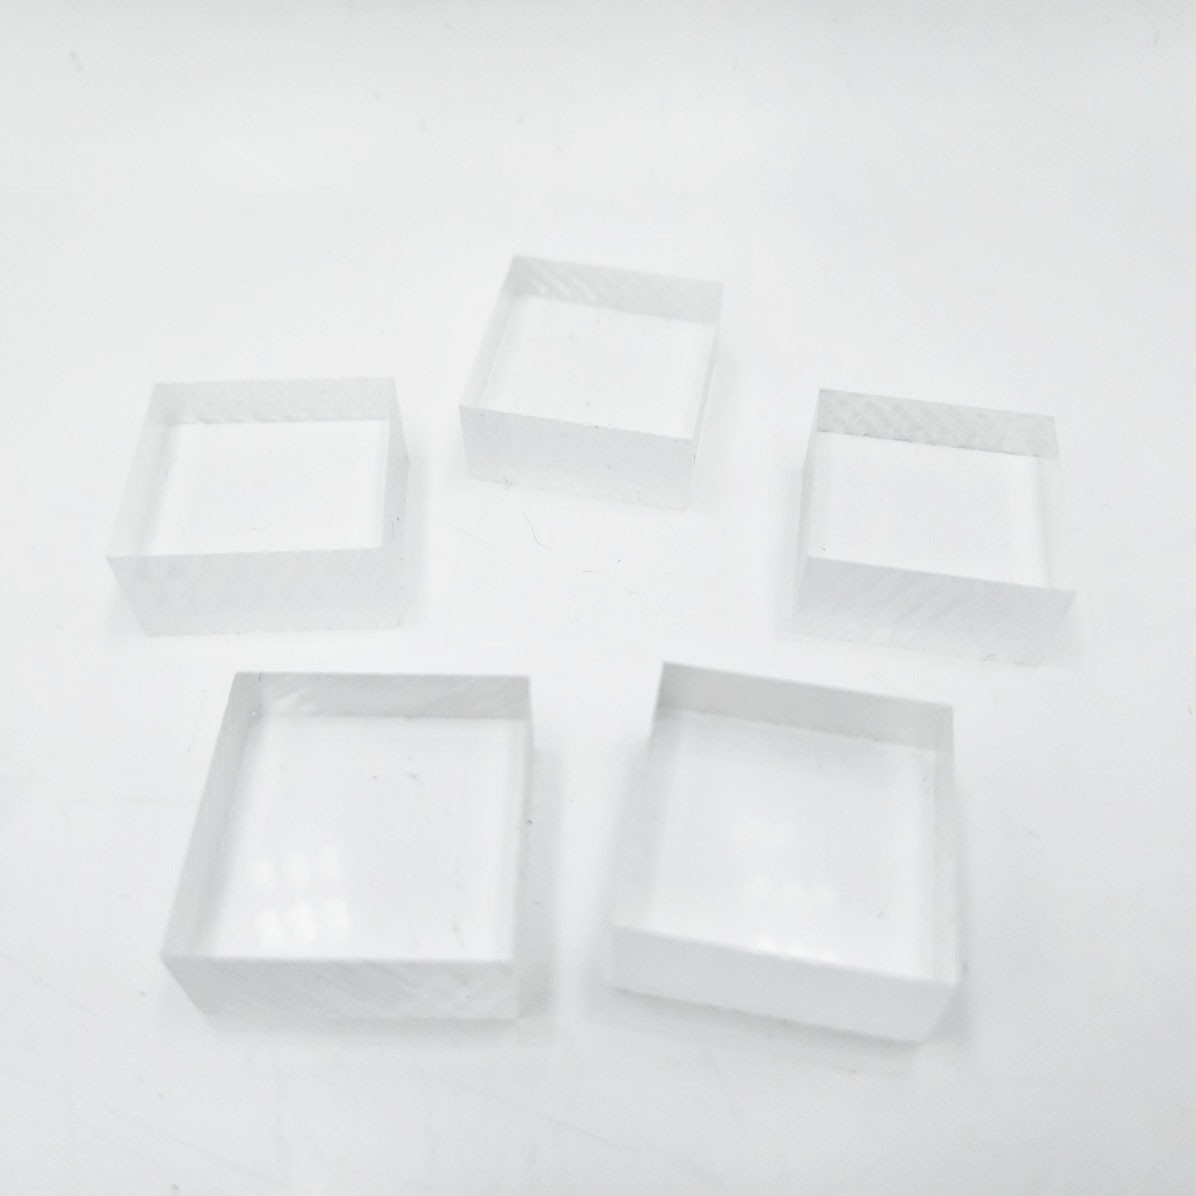 Acrylic Blocks 1 inch - set of 5